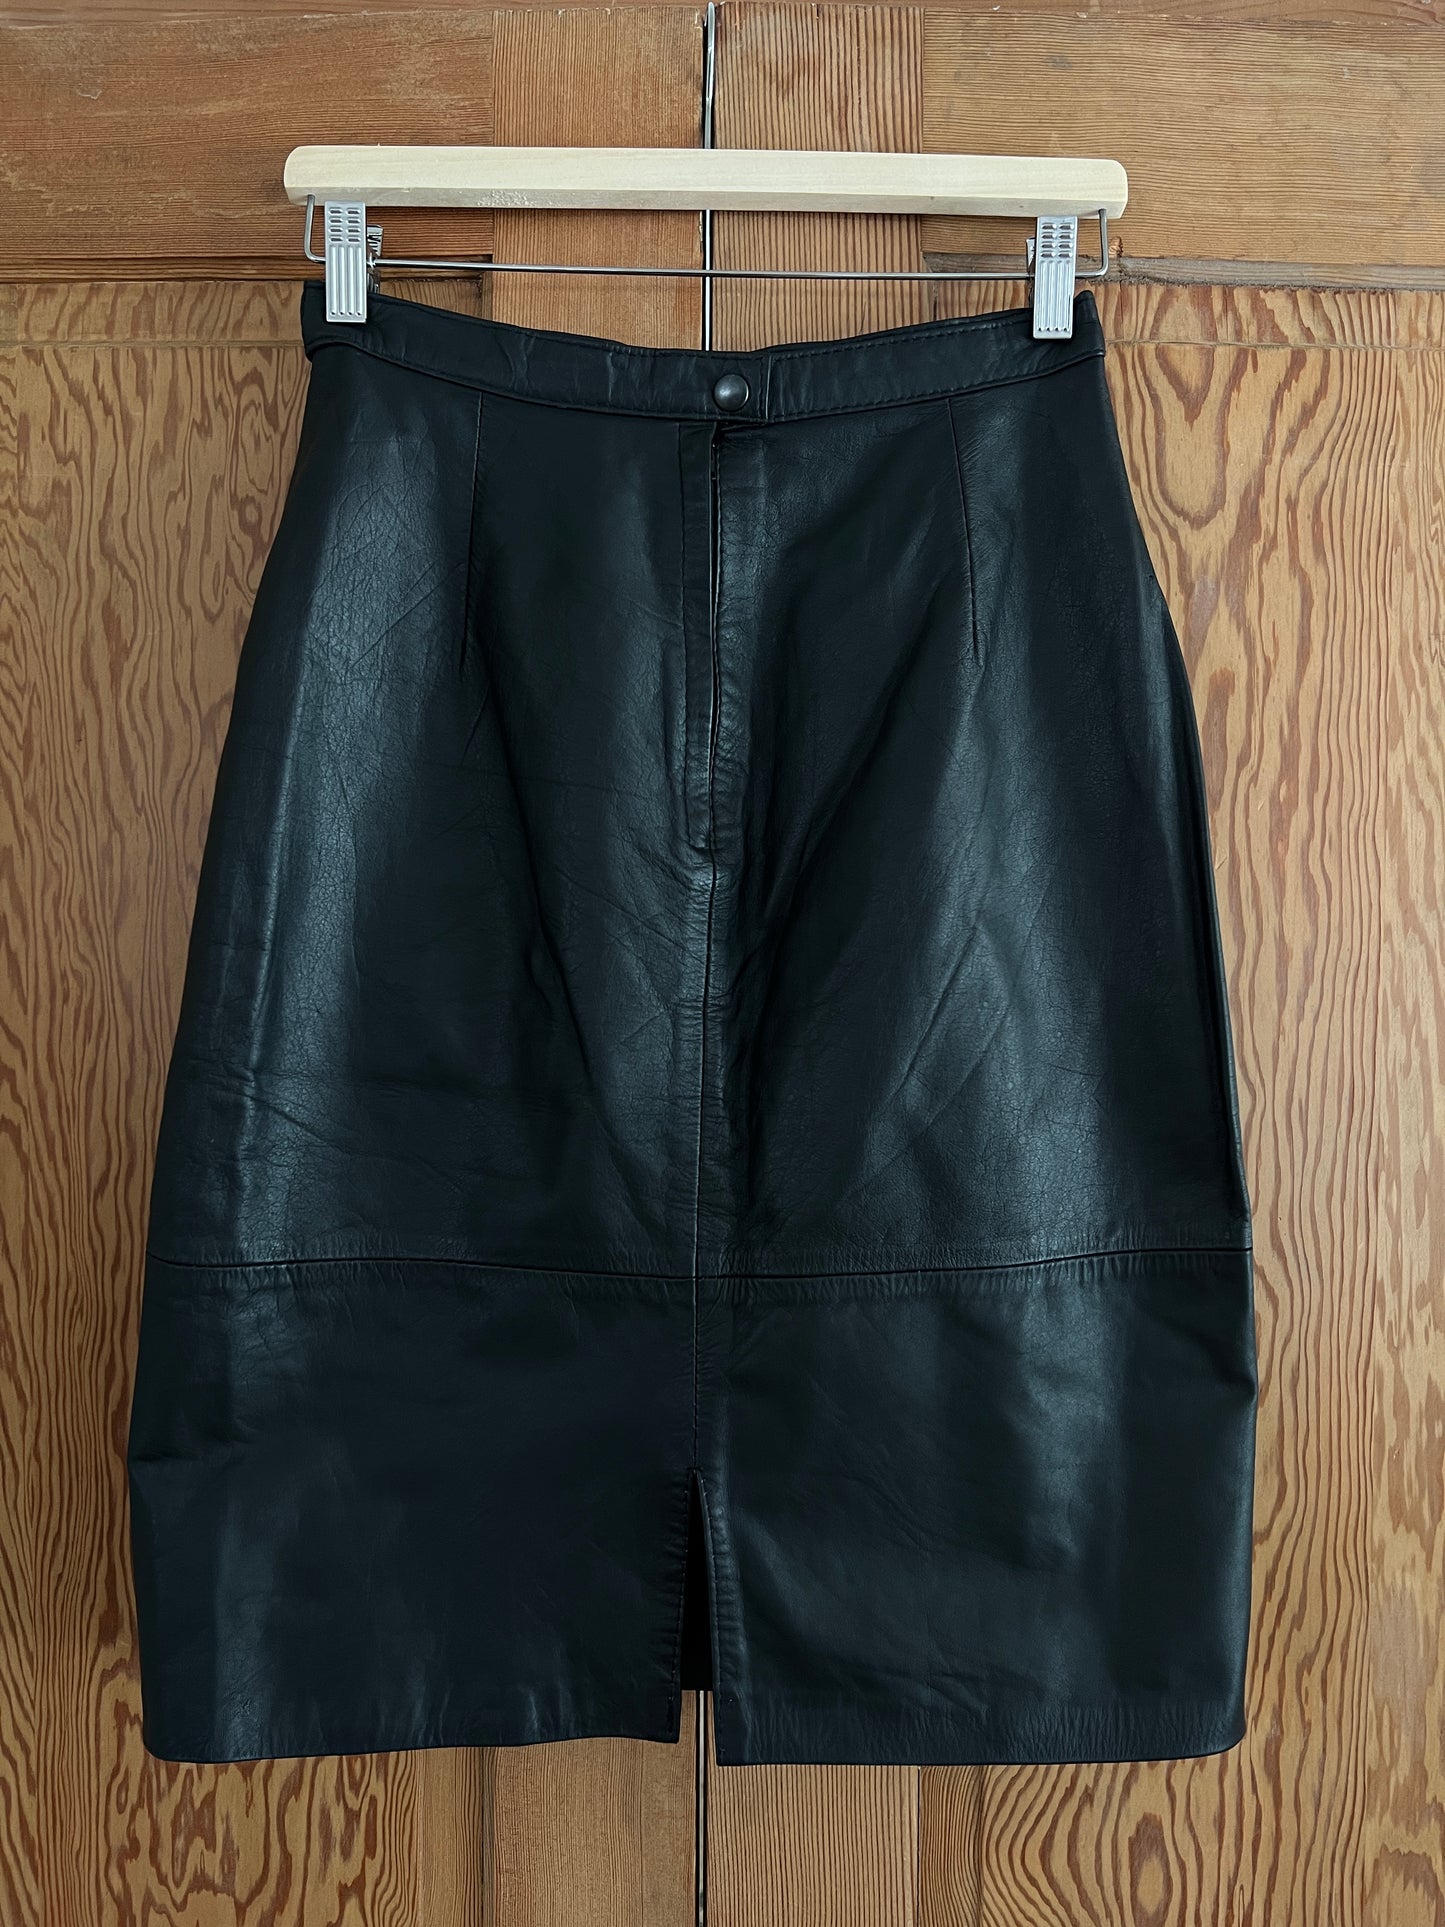 Black Leather skirt